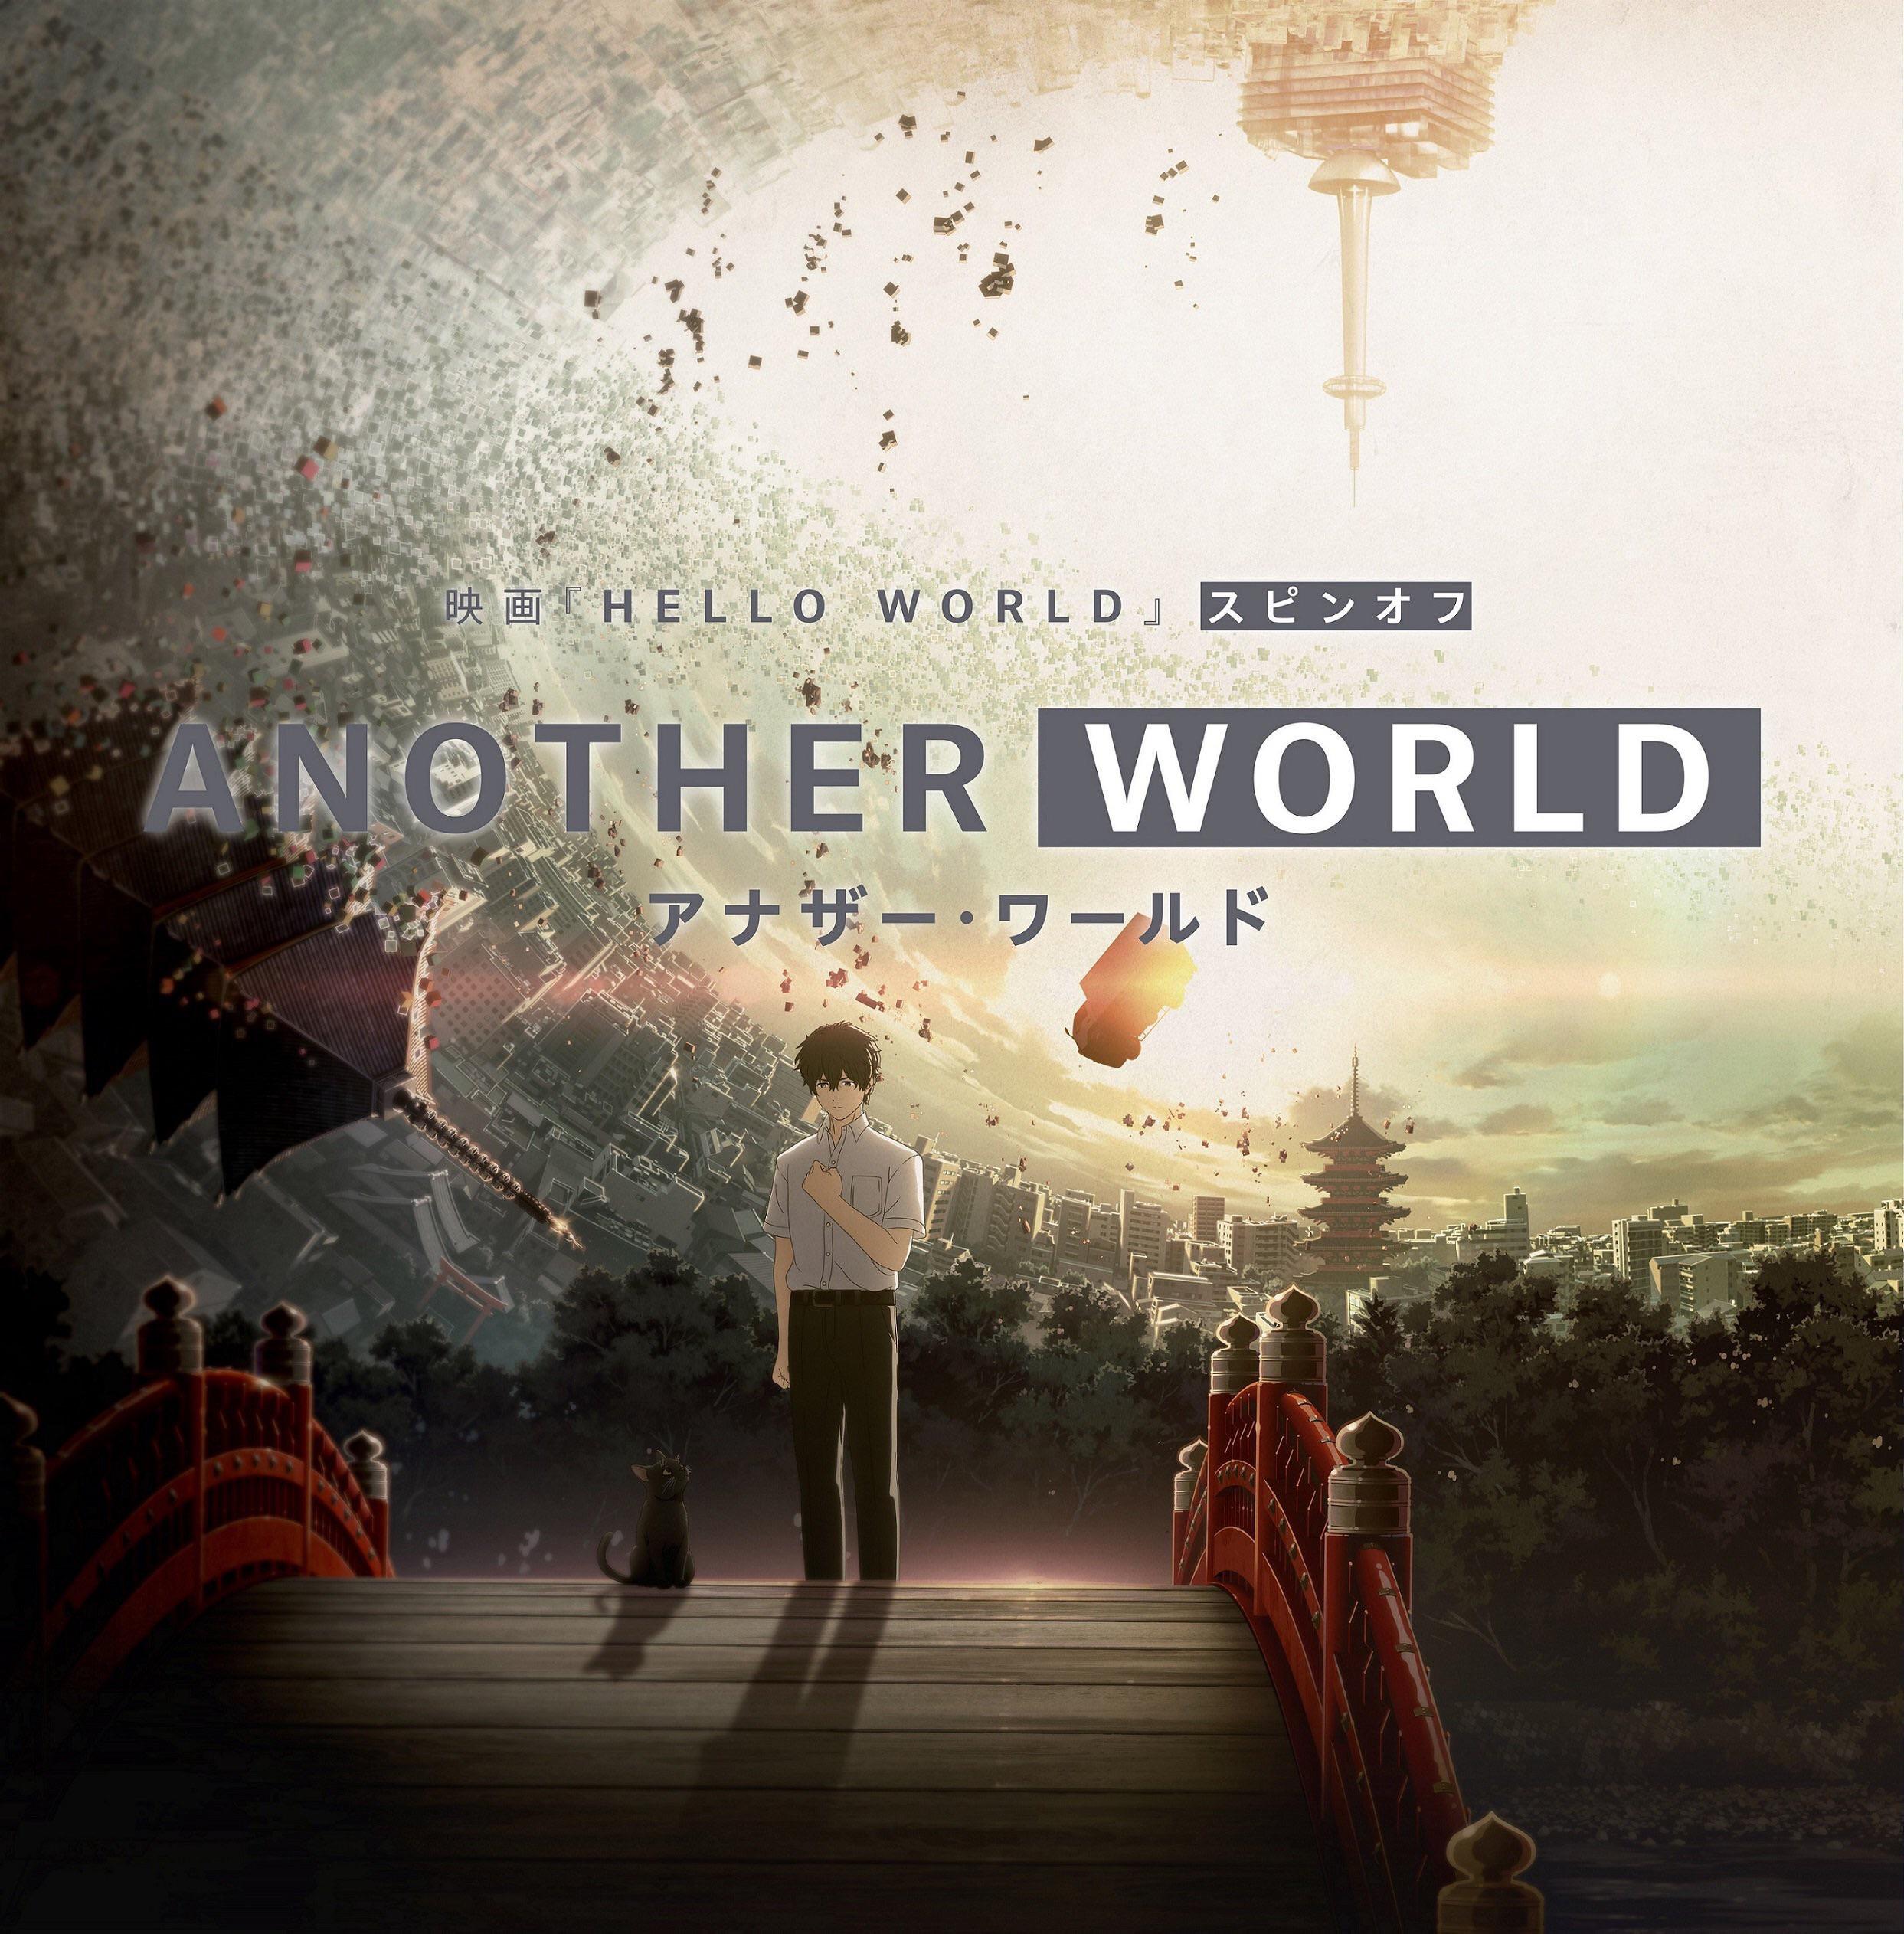 Hello World-Film bekommt Spin-Off Anime mit dem Titel Another World